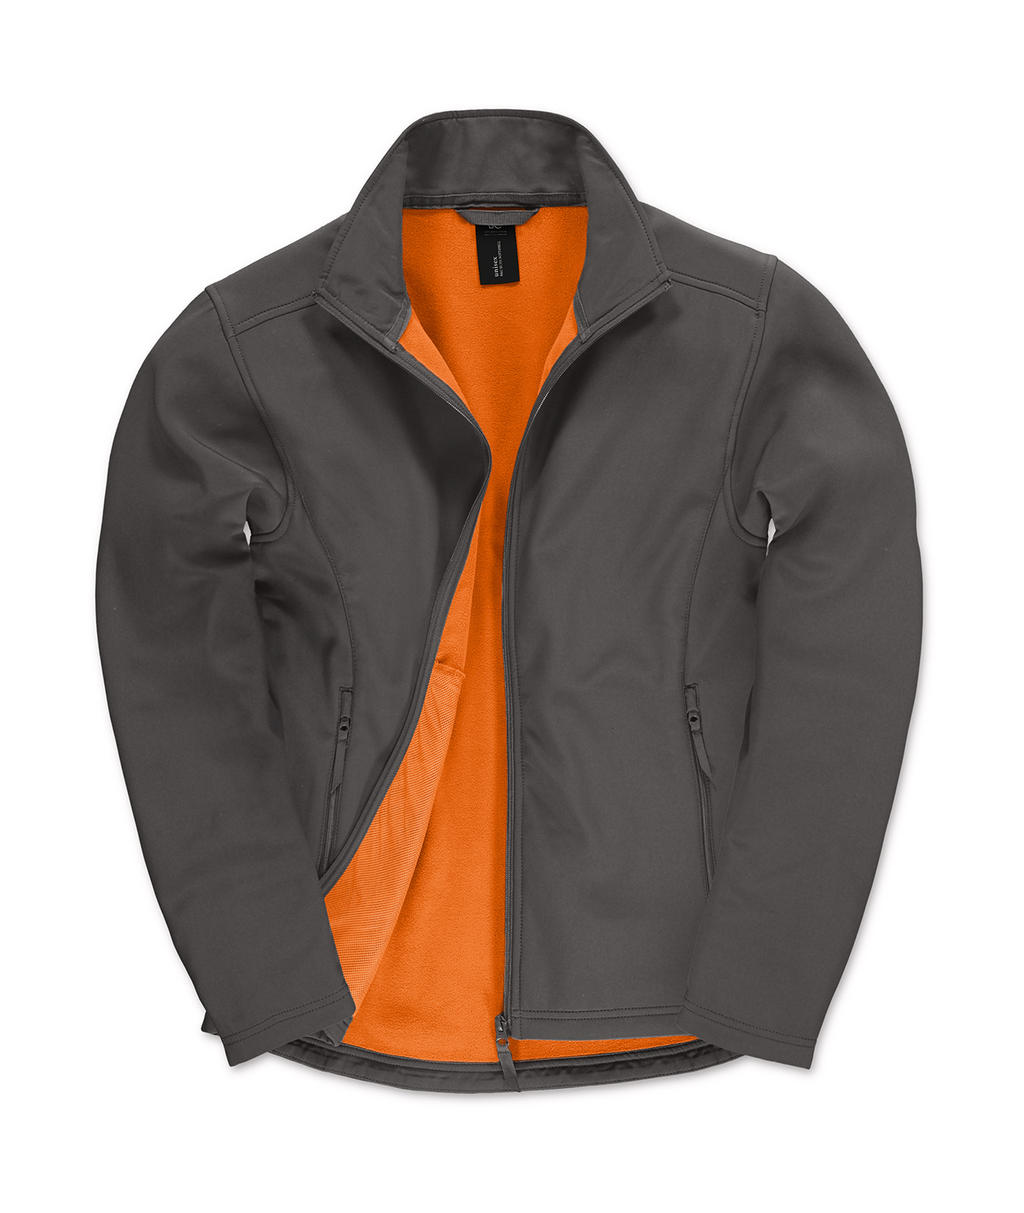  ID.701 Softshell Jacket in Farbe Dark Grey/Neon Orange